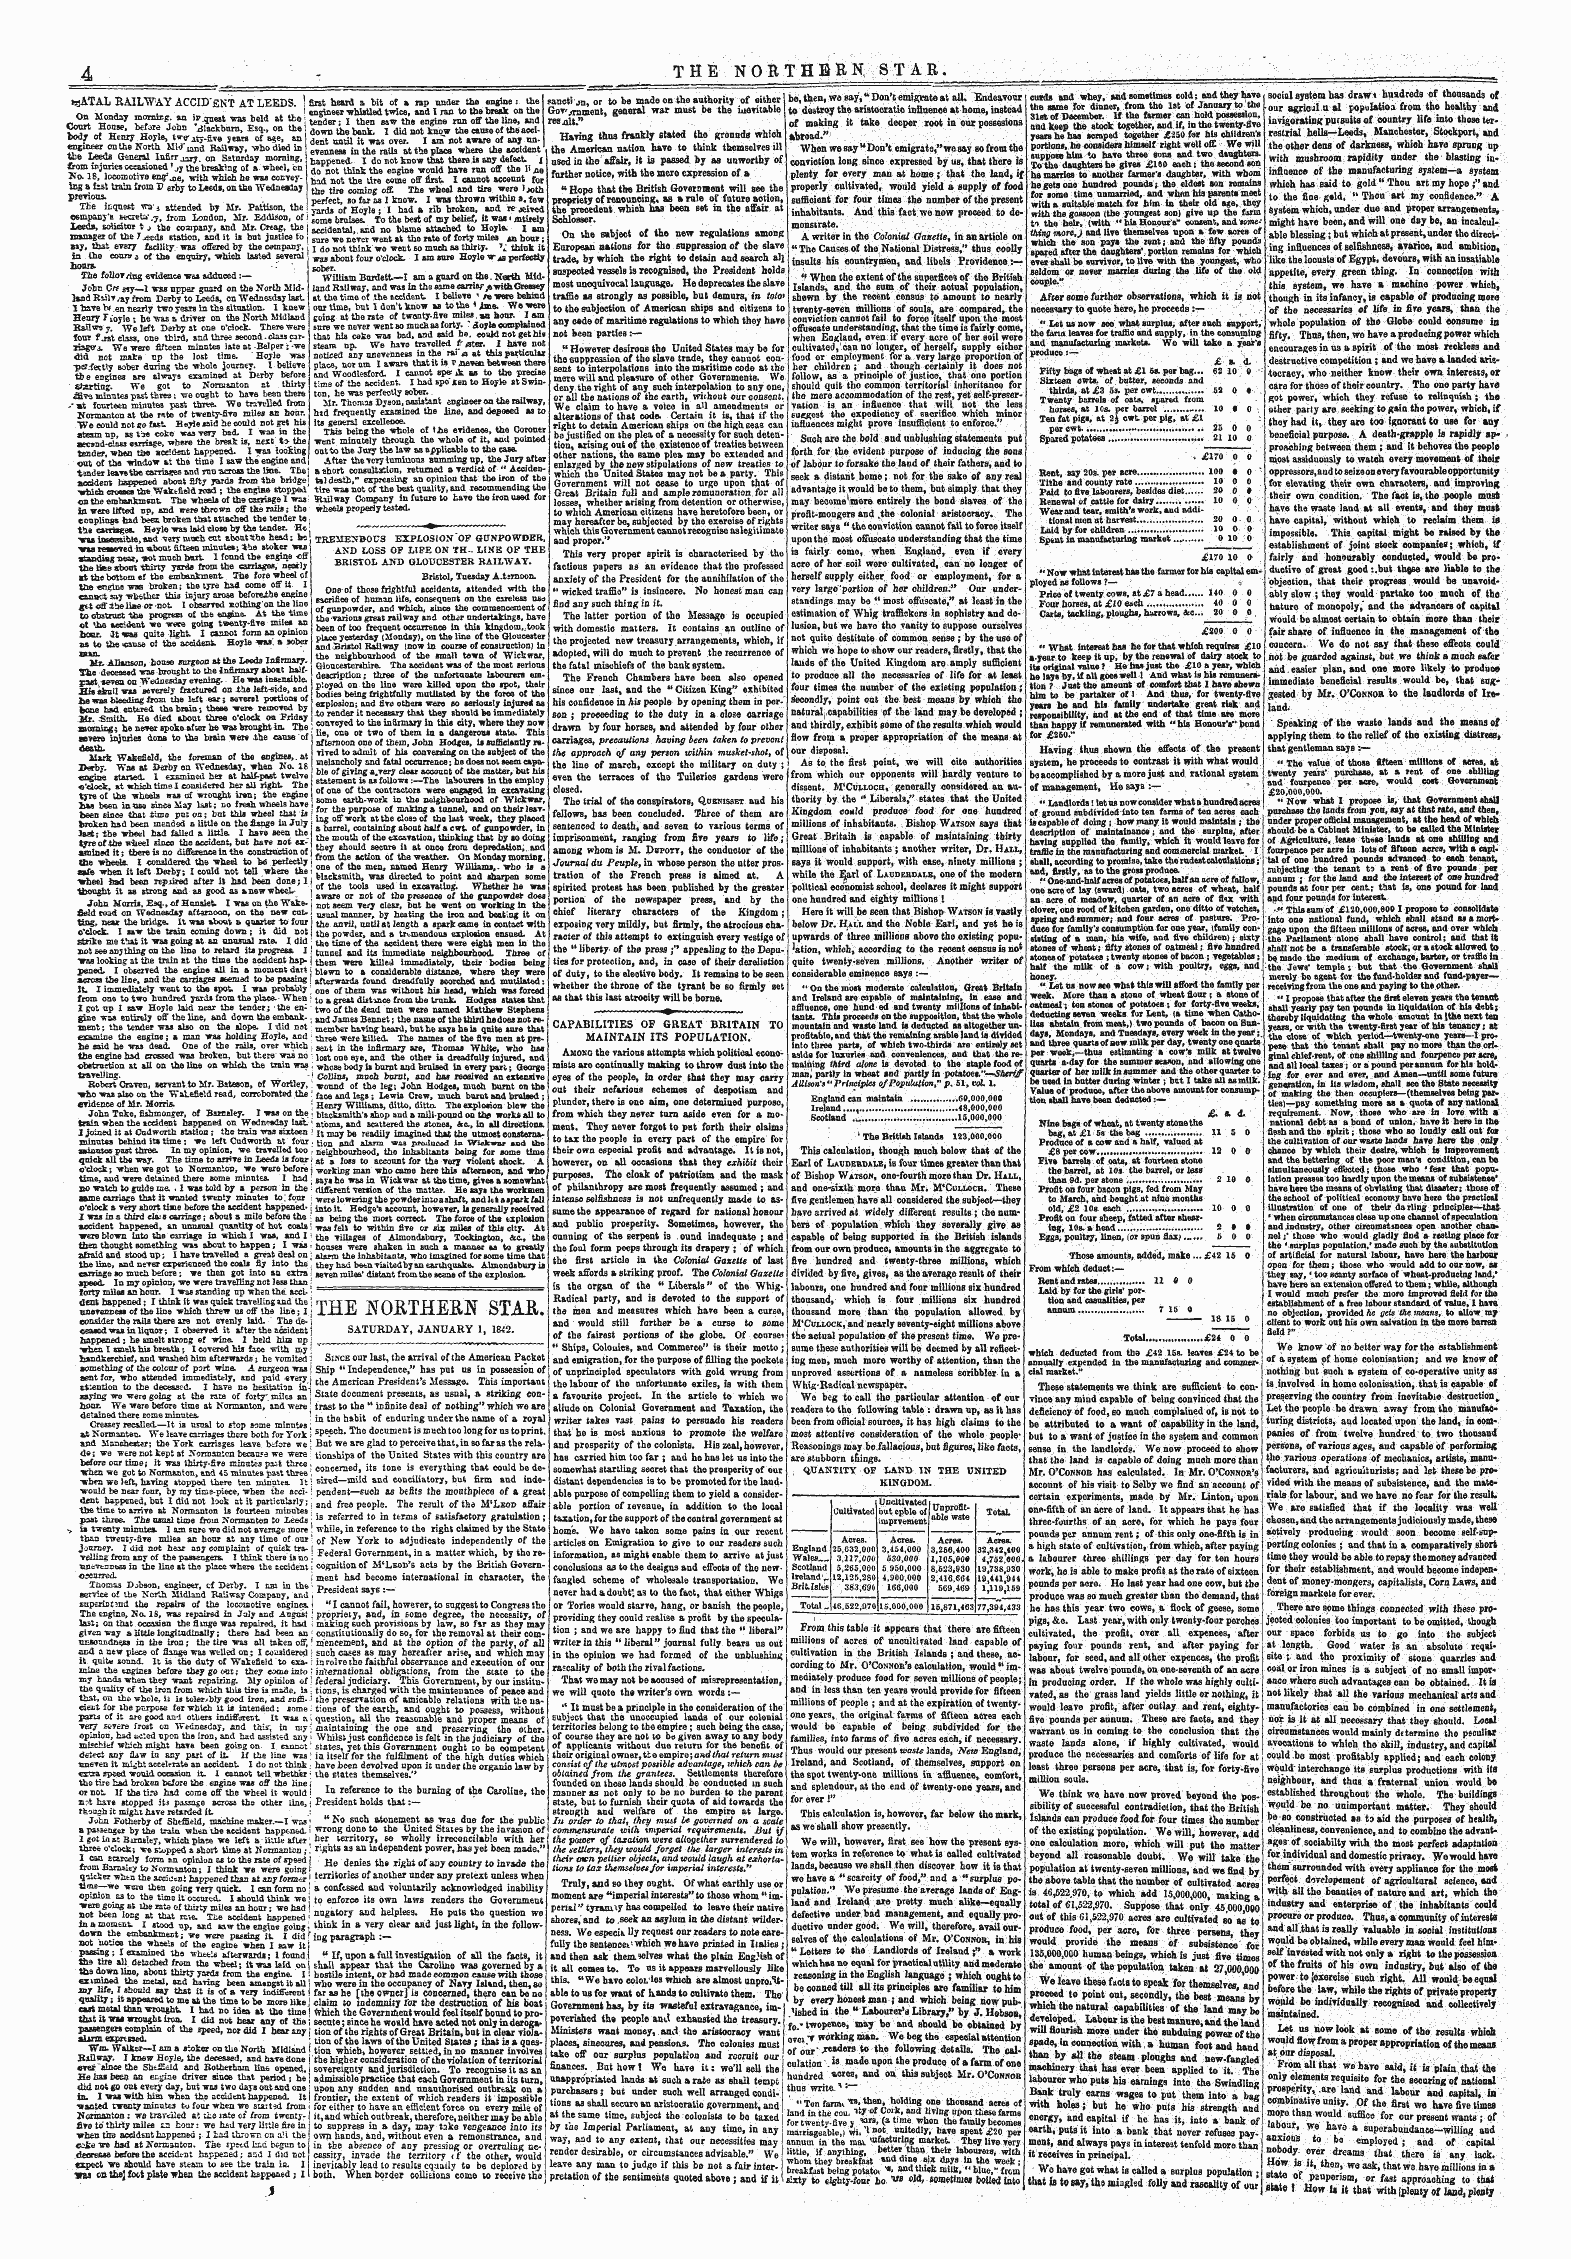 Northern Star (1837-1852): jS F Y, 4th edition: 4